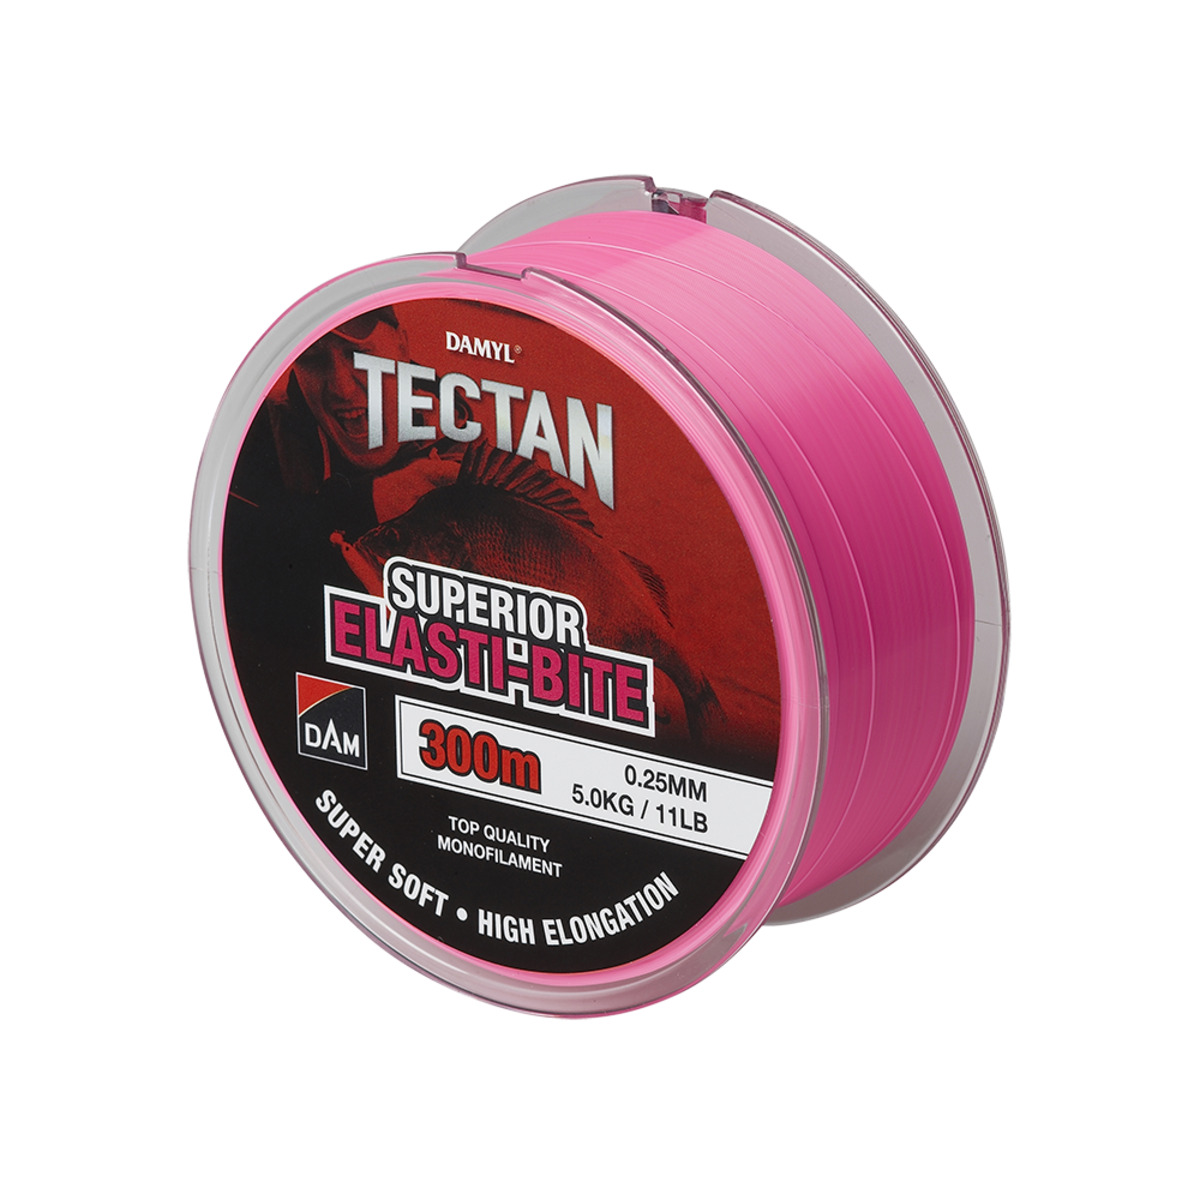 Dam Tectan Superior Elasti-bite 300m - 0.25MM 5KG 11LBS PINK